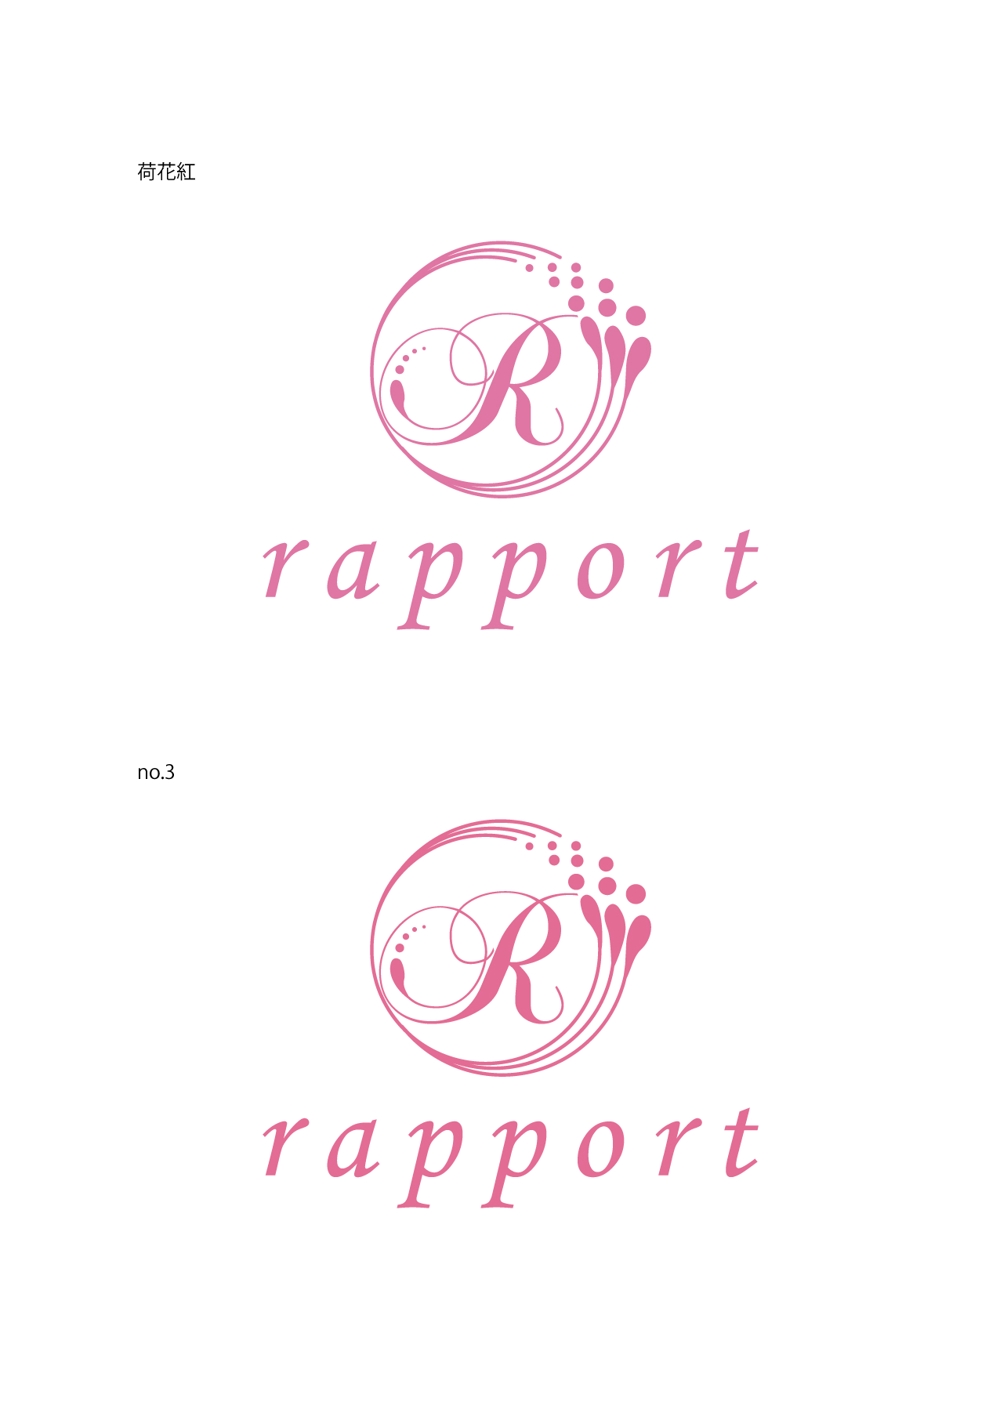 rapport logo-04-01.jpg